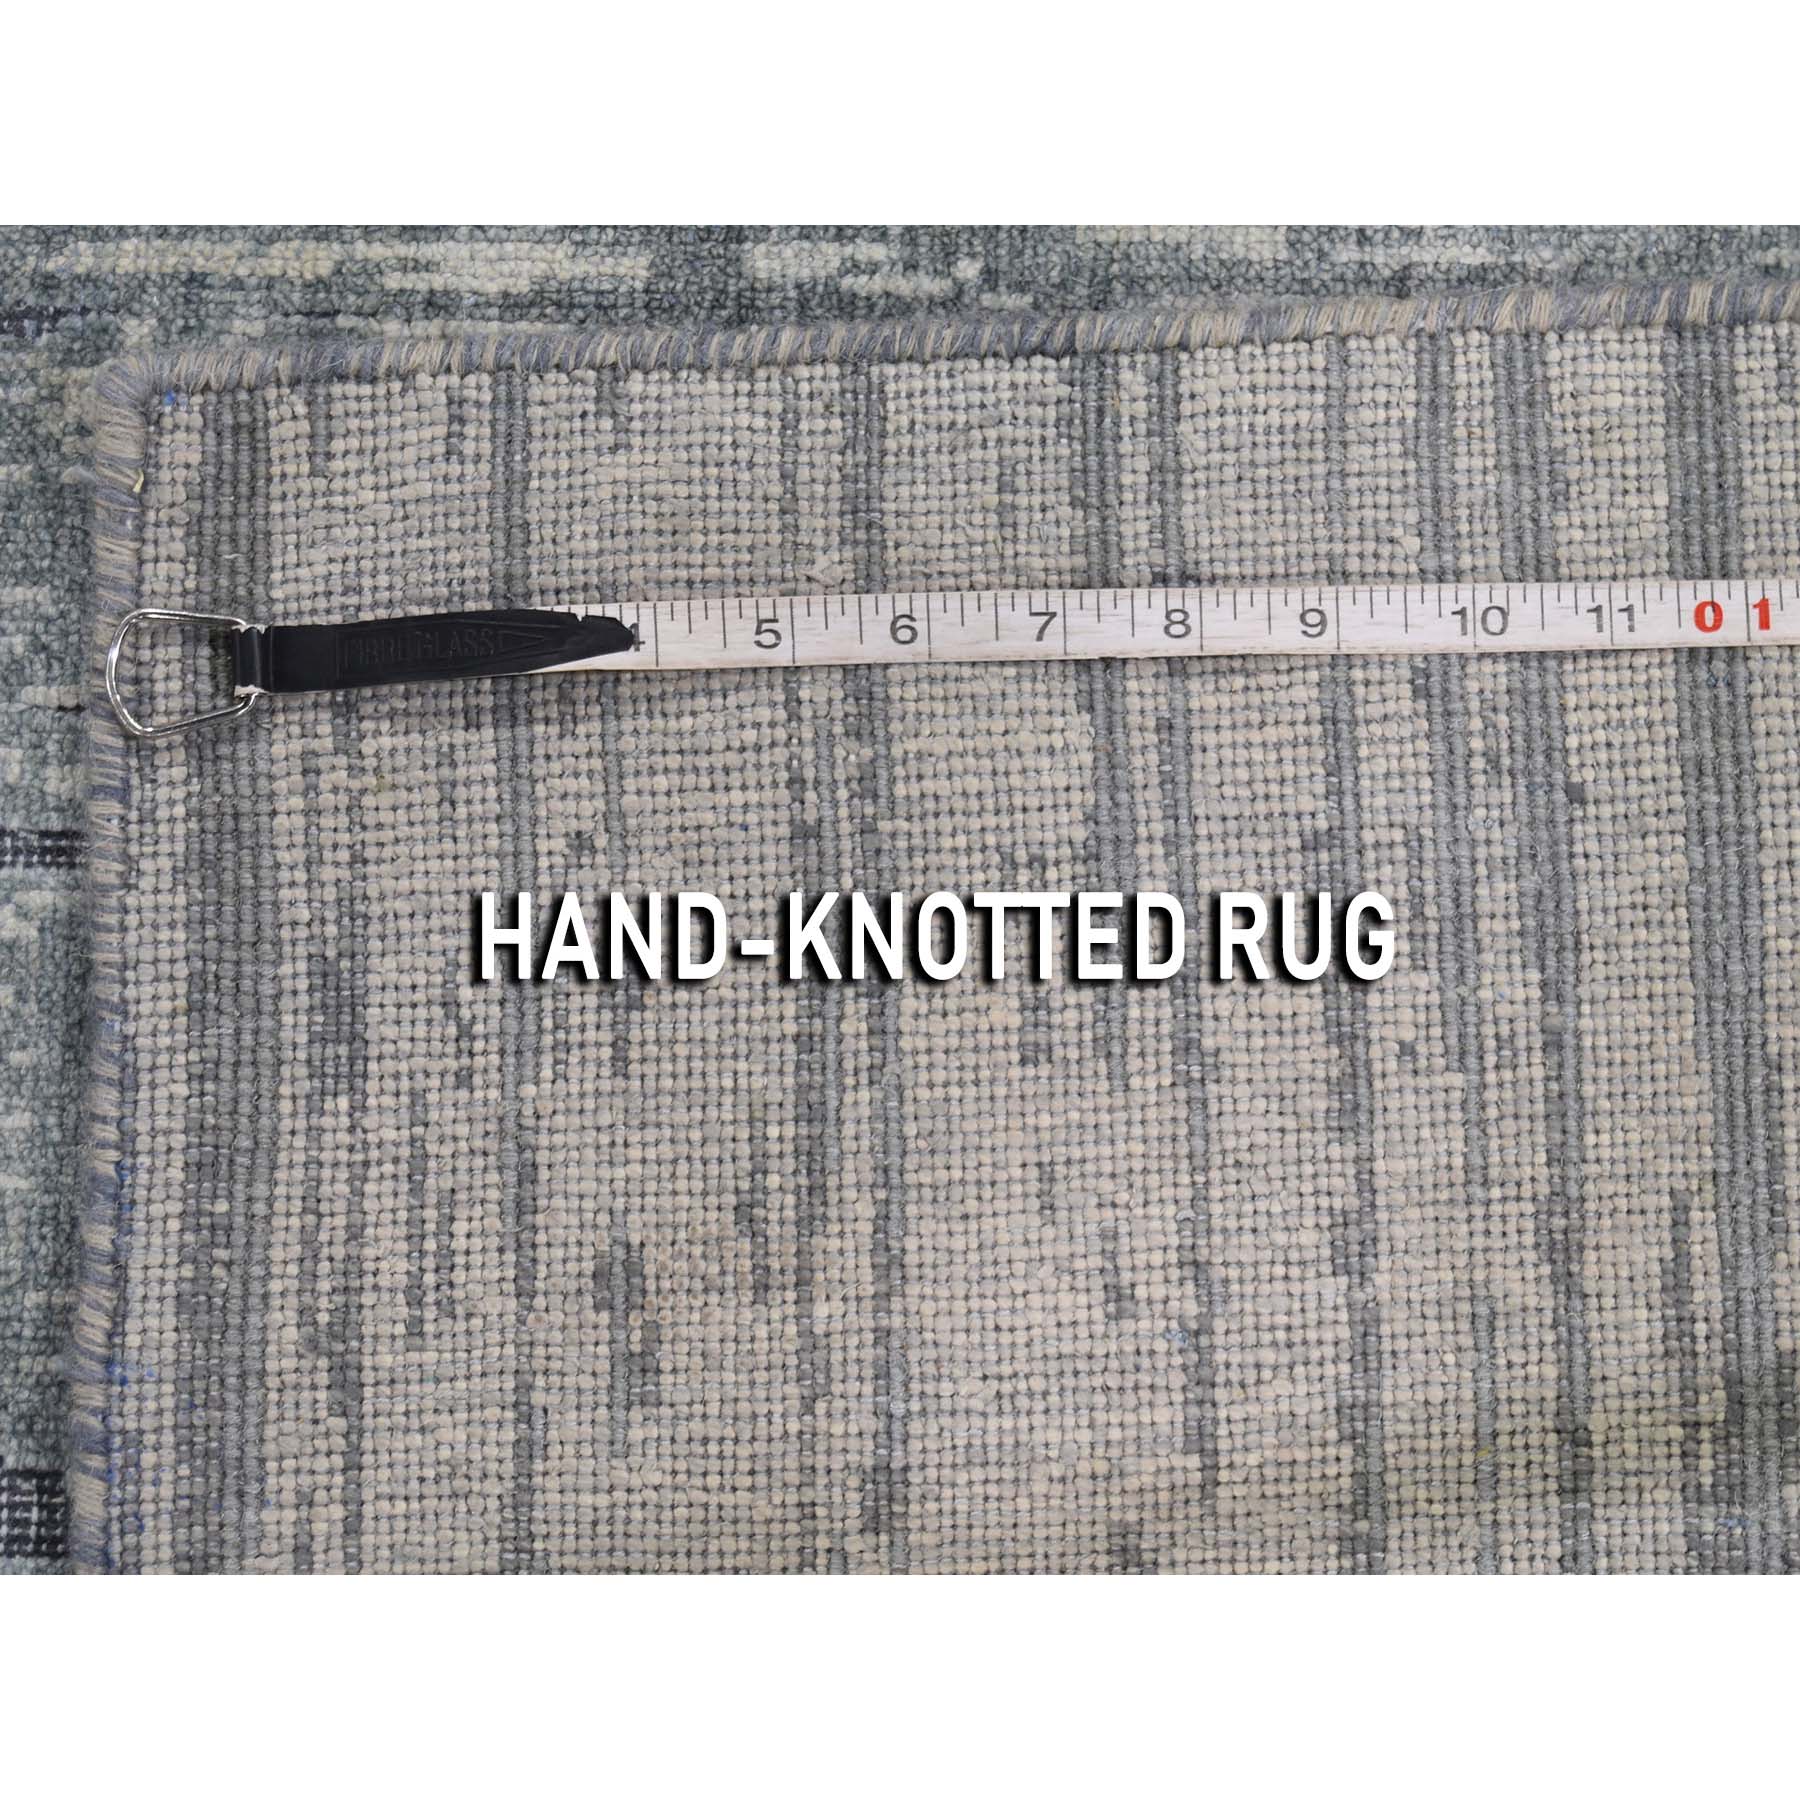 8'x10'4" Ombre Design Pure Silk Hand Woven Oriental Rug 